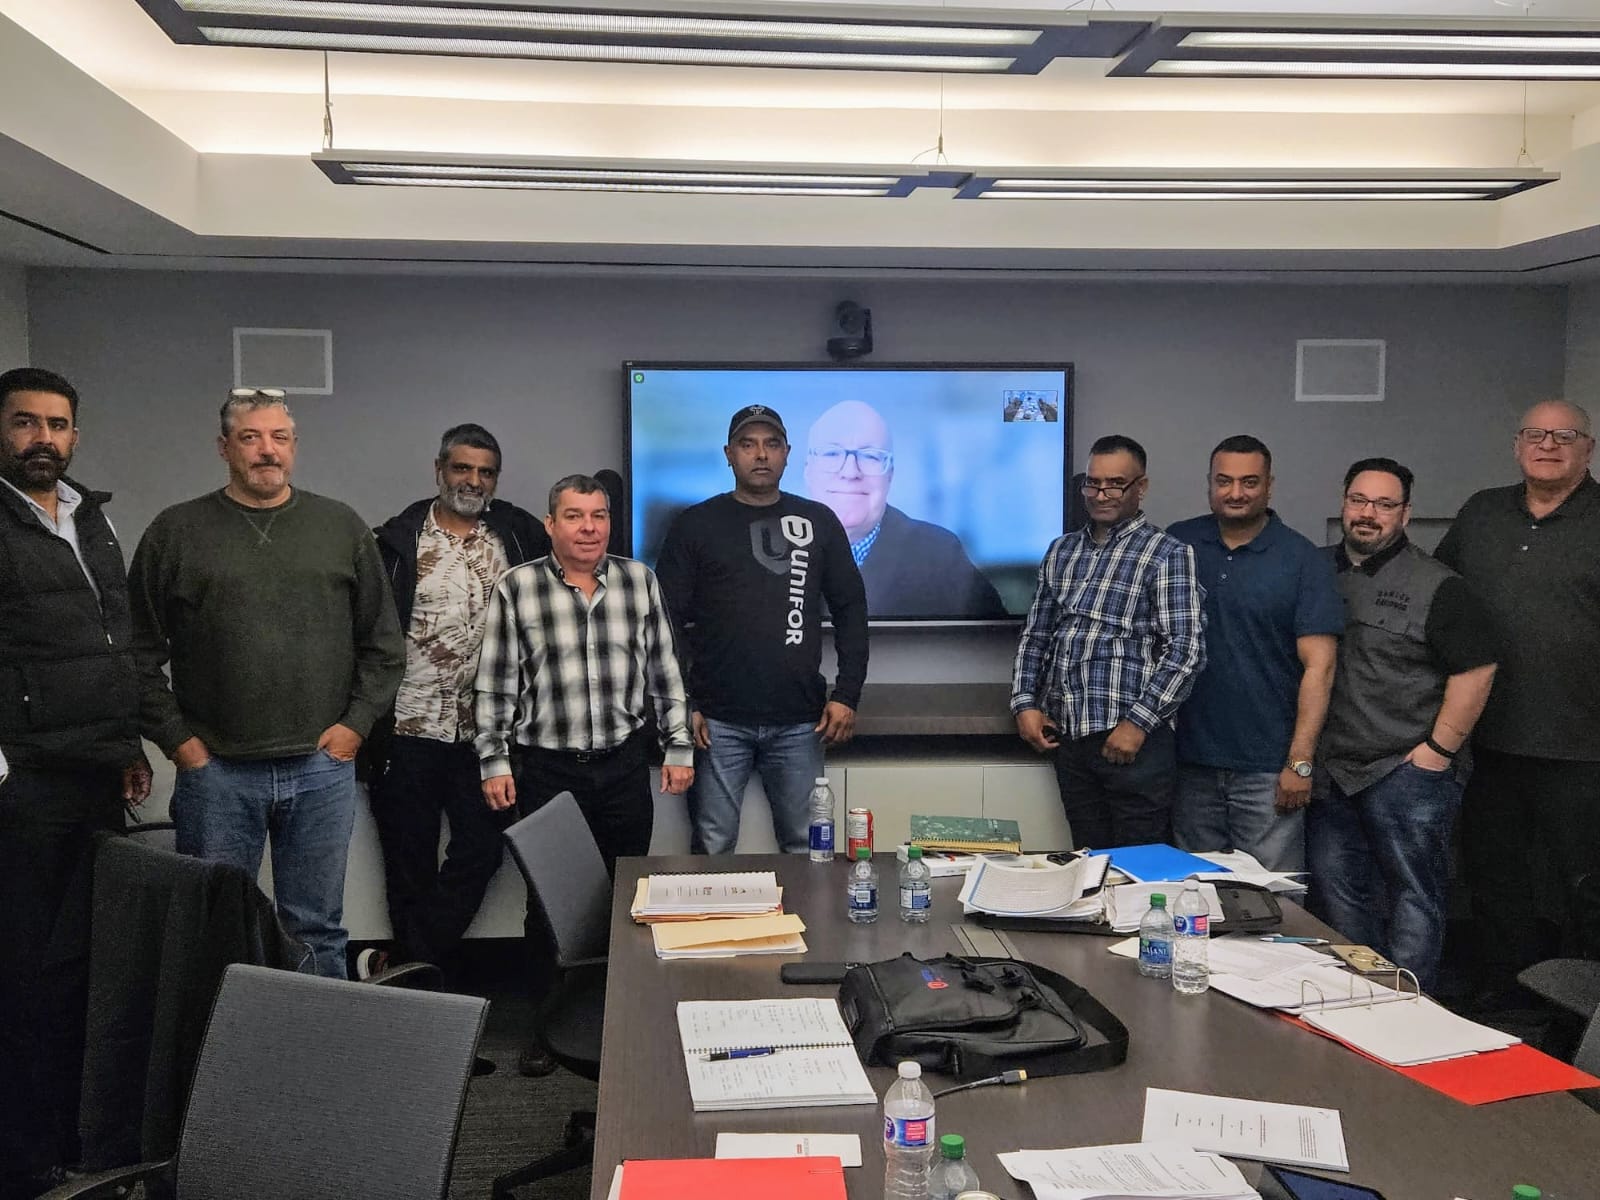 Nine men standing in front of a boardroom presentation screen